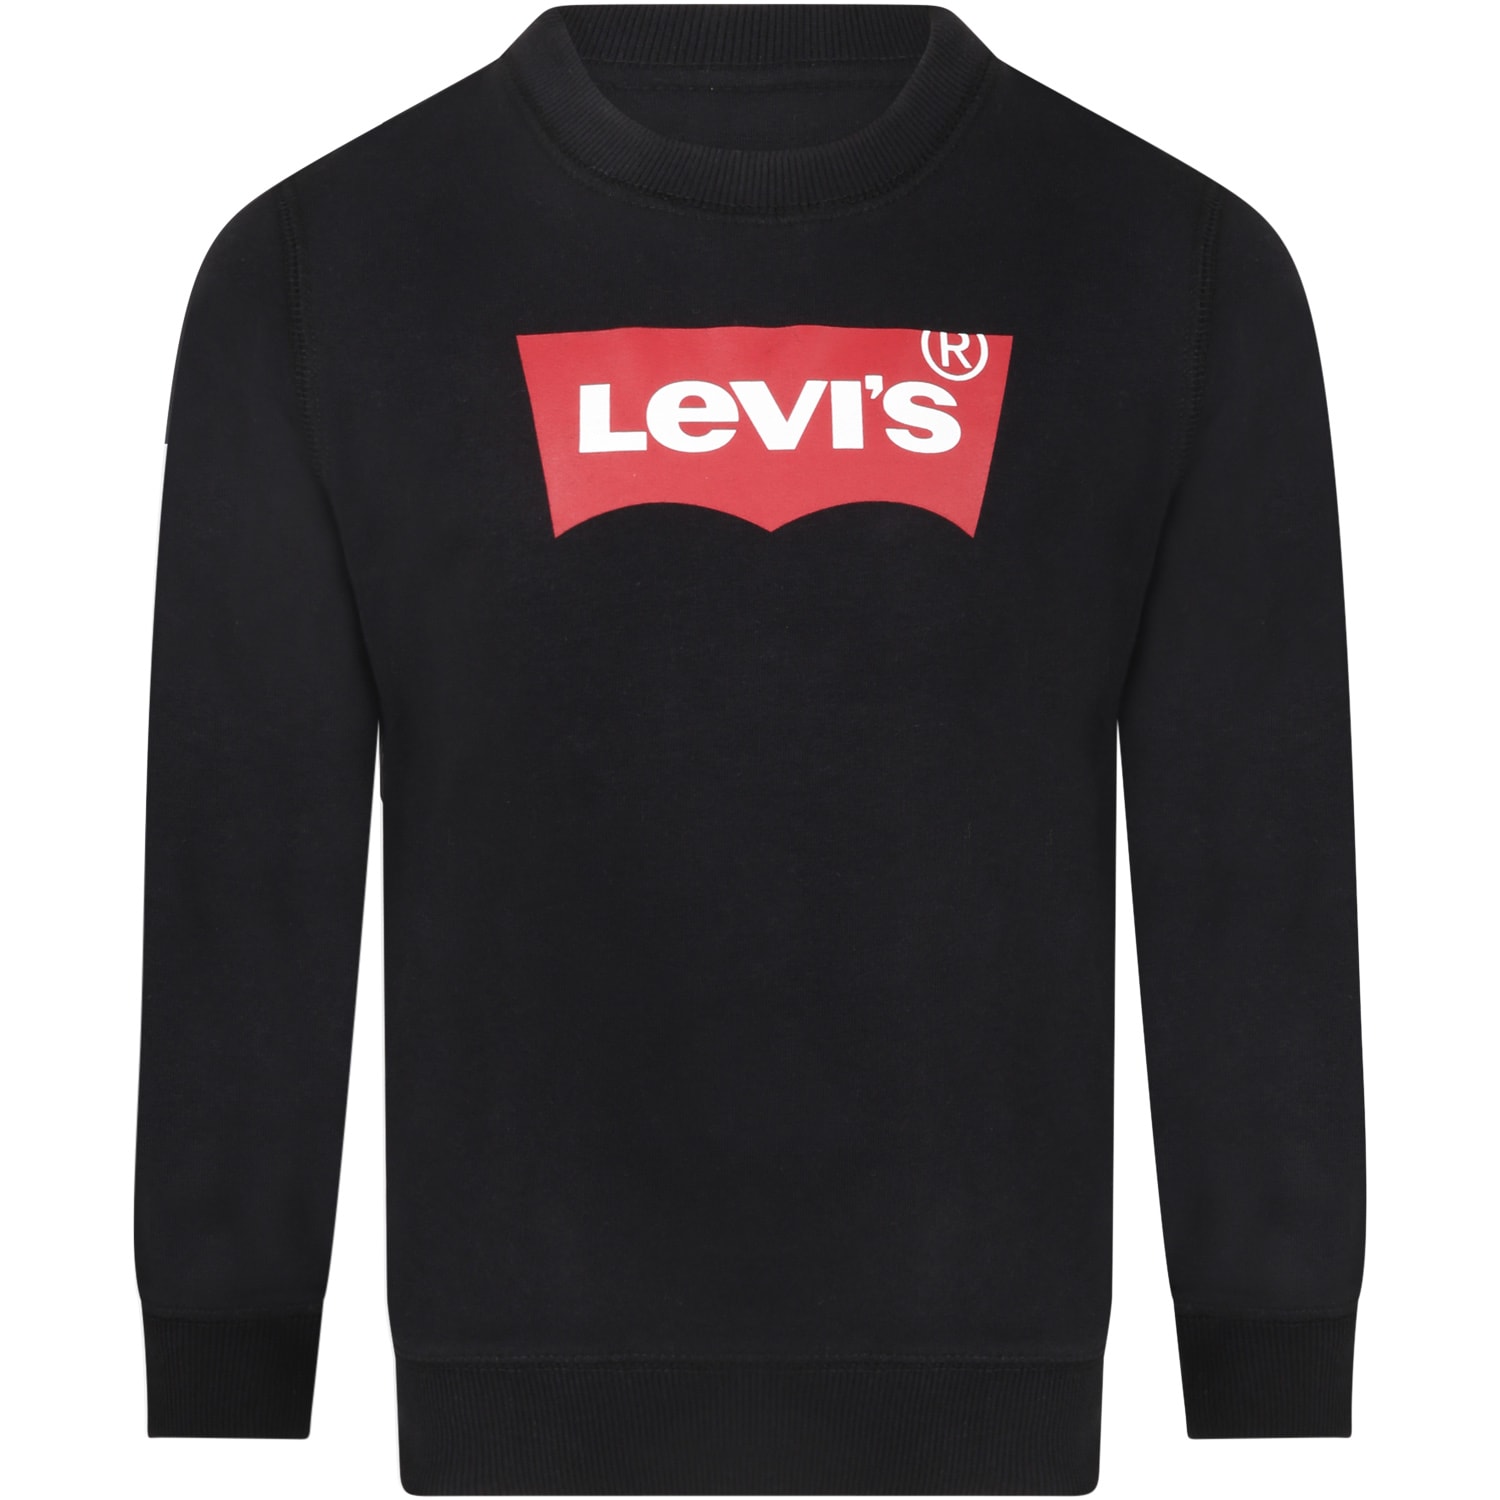 Levis Black Sweatshirt For Kids With Logo